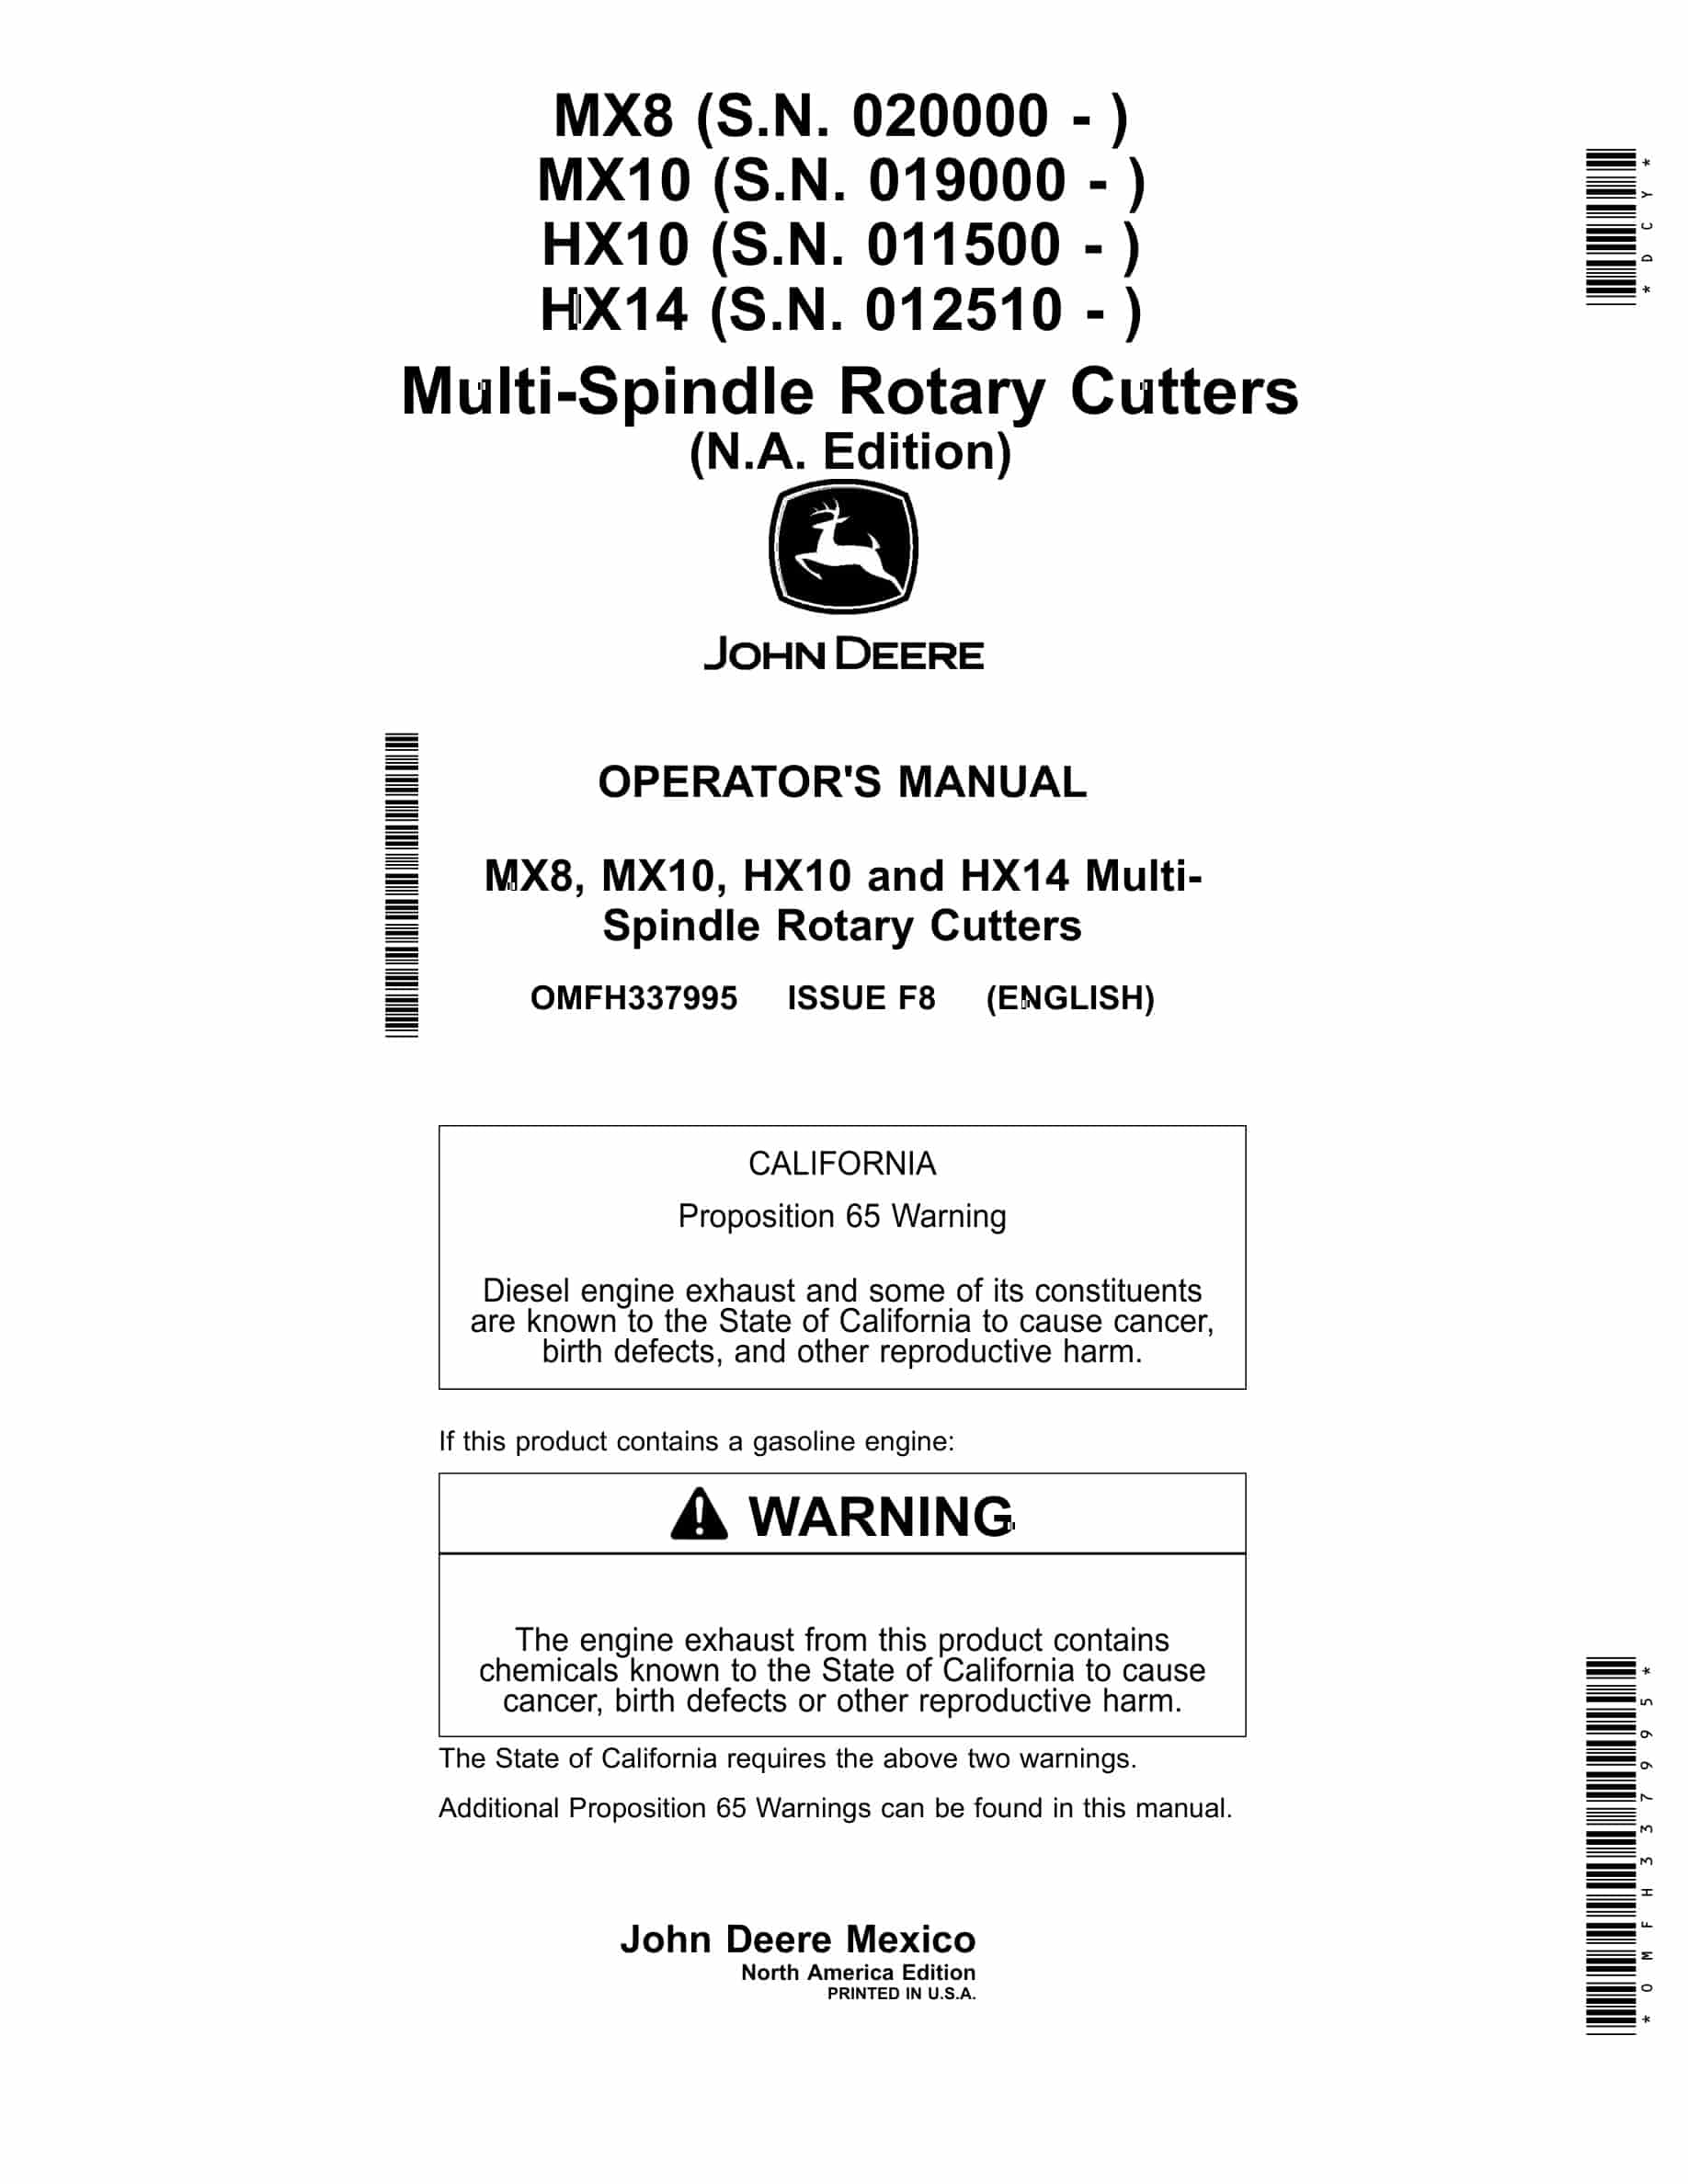 John Deere MX8, MX10, HX10 and HX14 MultiSpindle Rotary Cutter Operator Manual OMFH337995-1